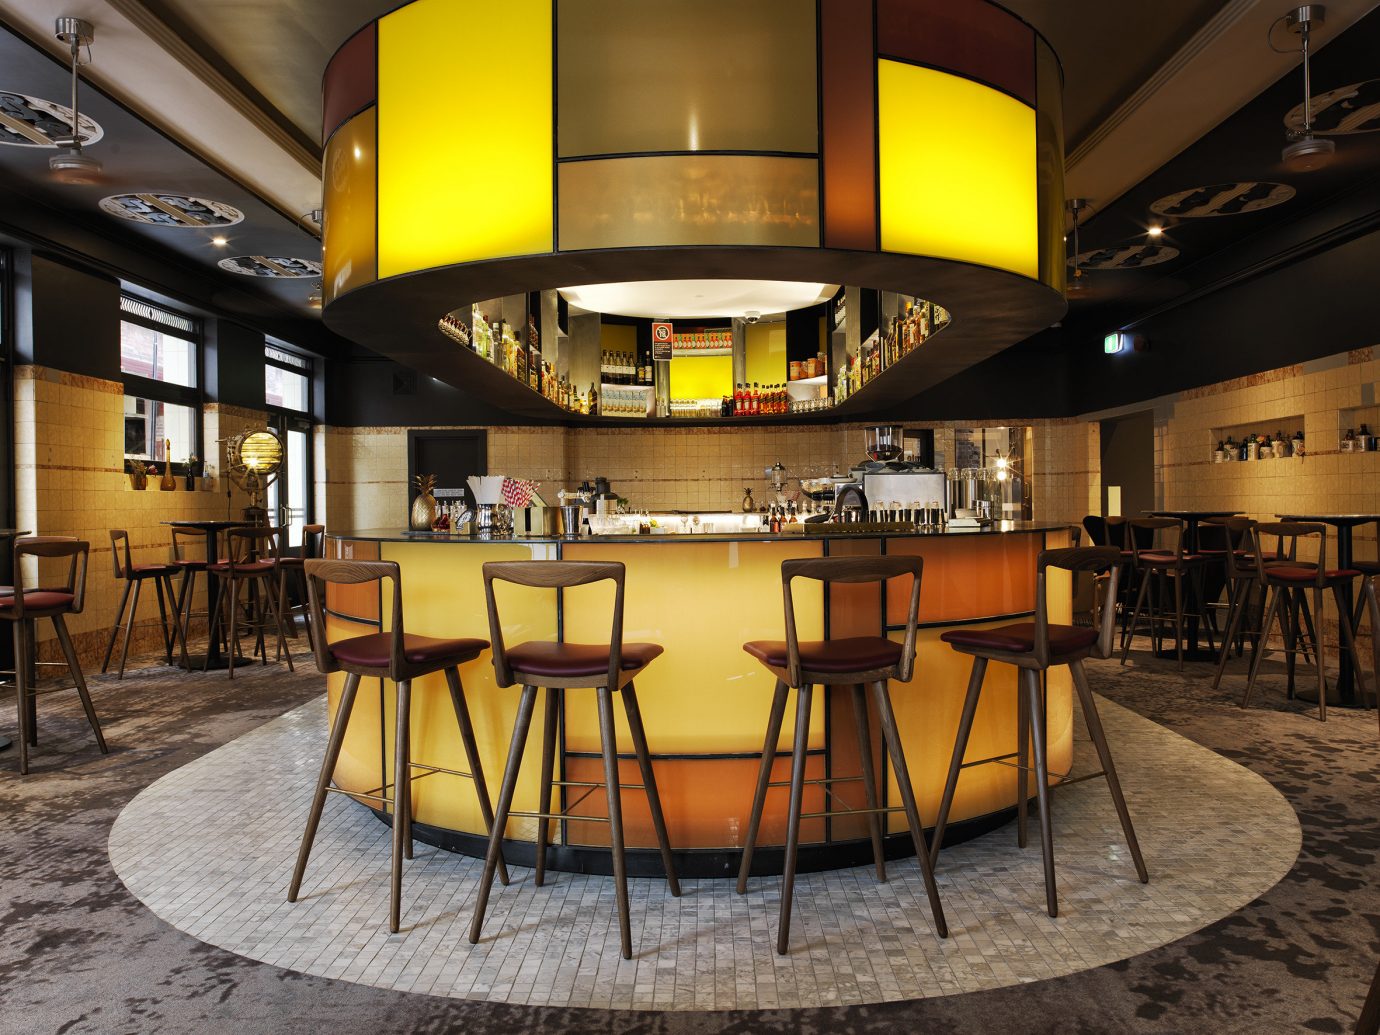 Trip Ideas chair yellow indoor man made object Lobby ceiling interior design lighting Dining Bar restaurant estate Design area